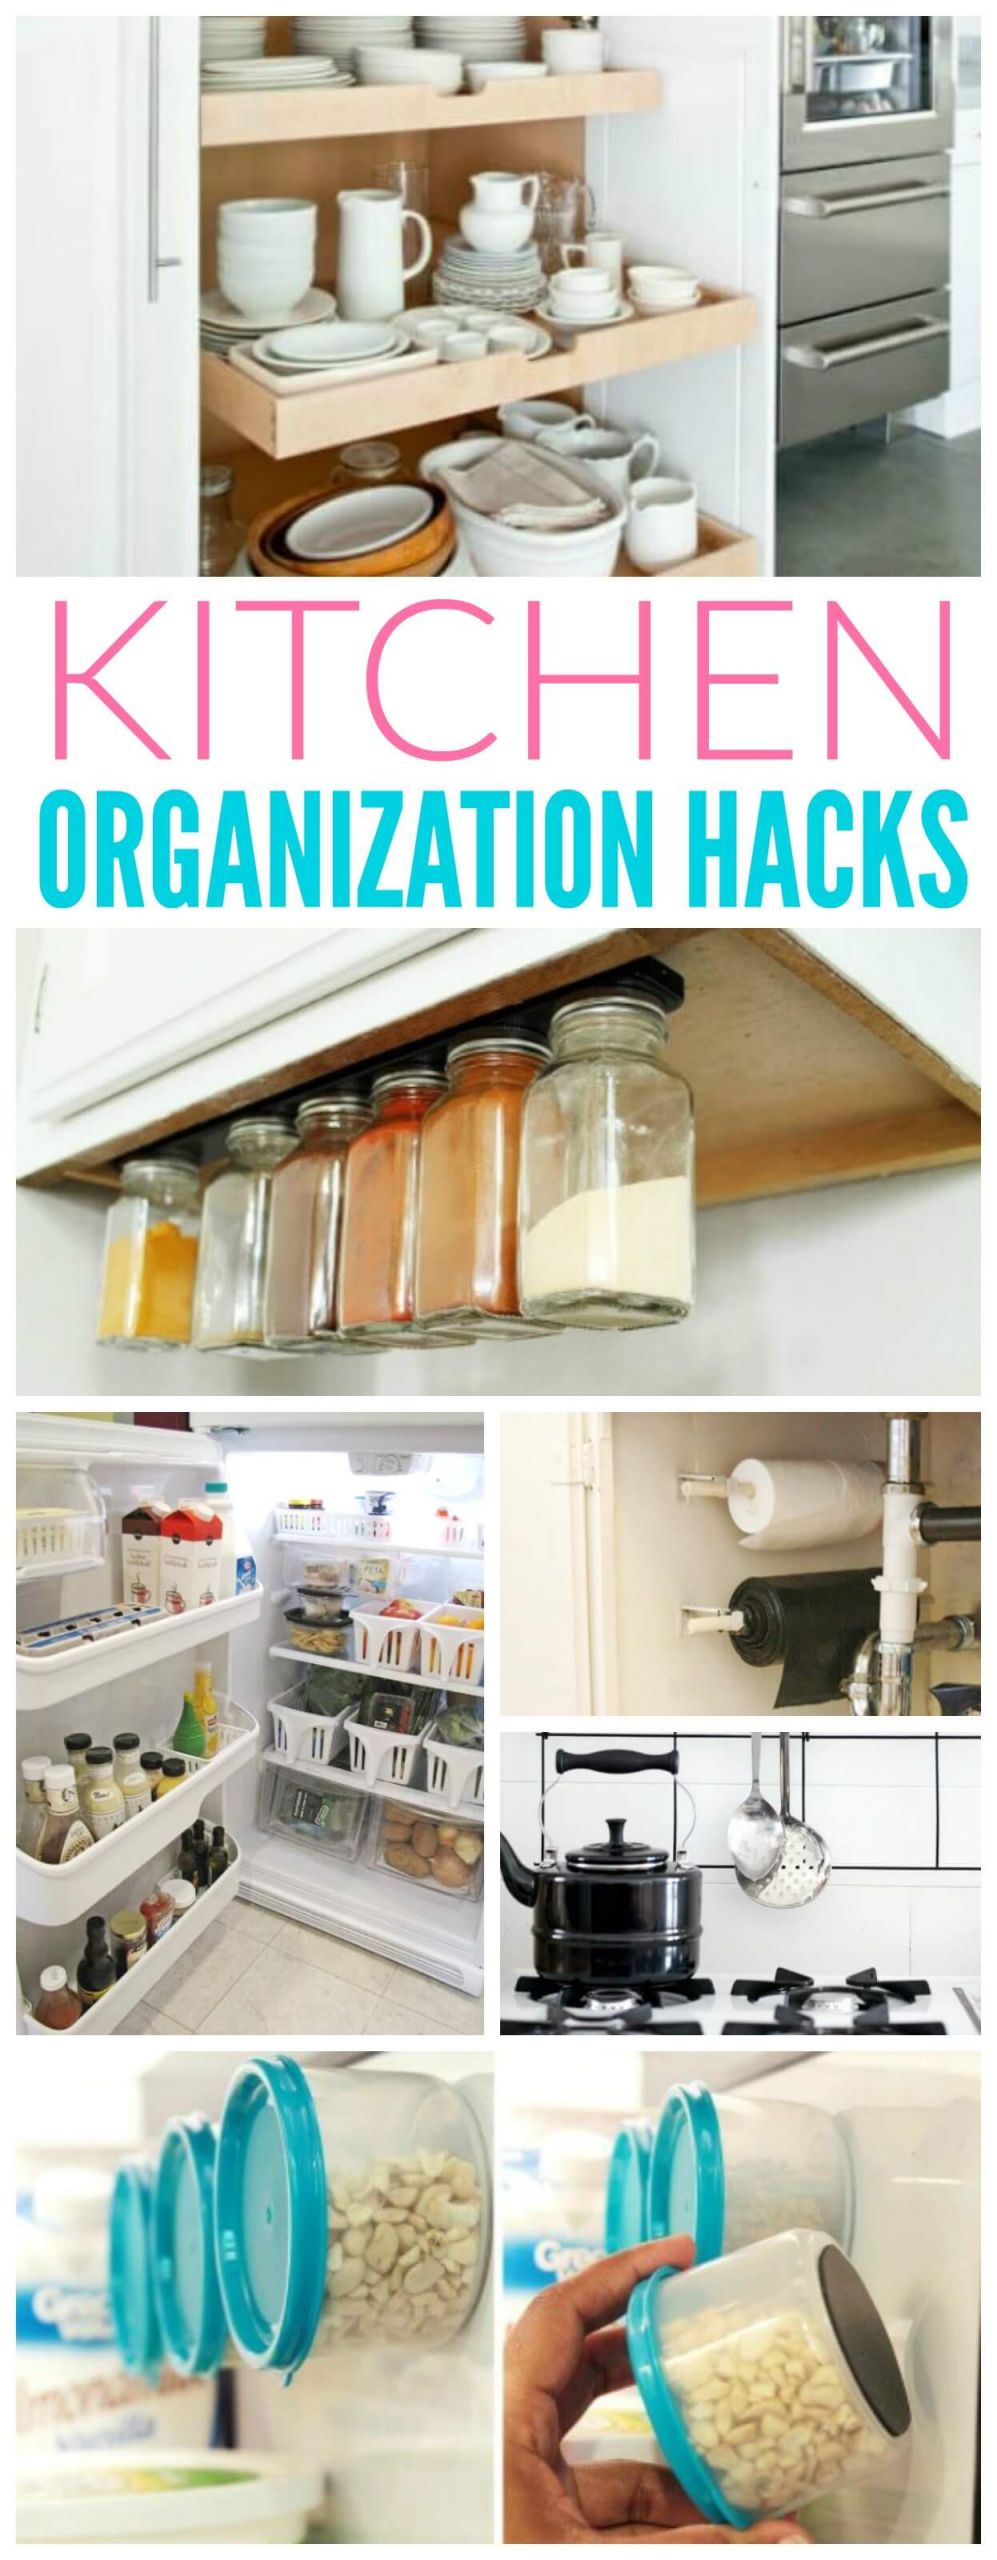 Kitchen Organizing Hacks
 Kitchen Organization Hacks